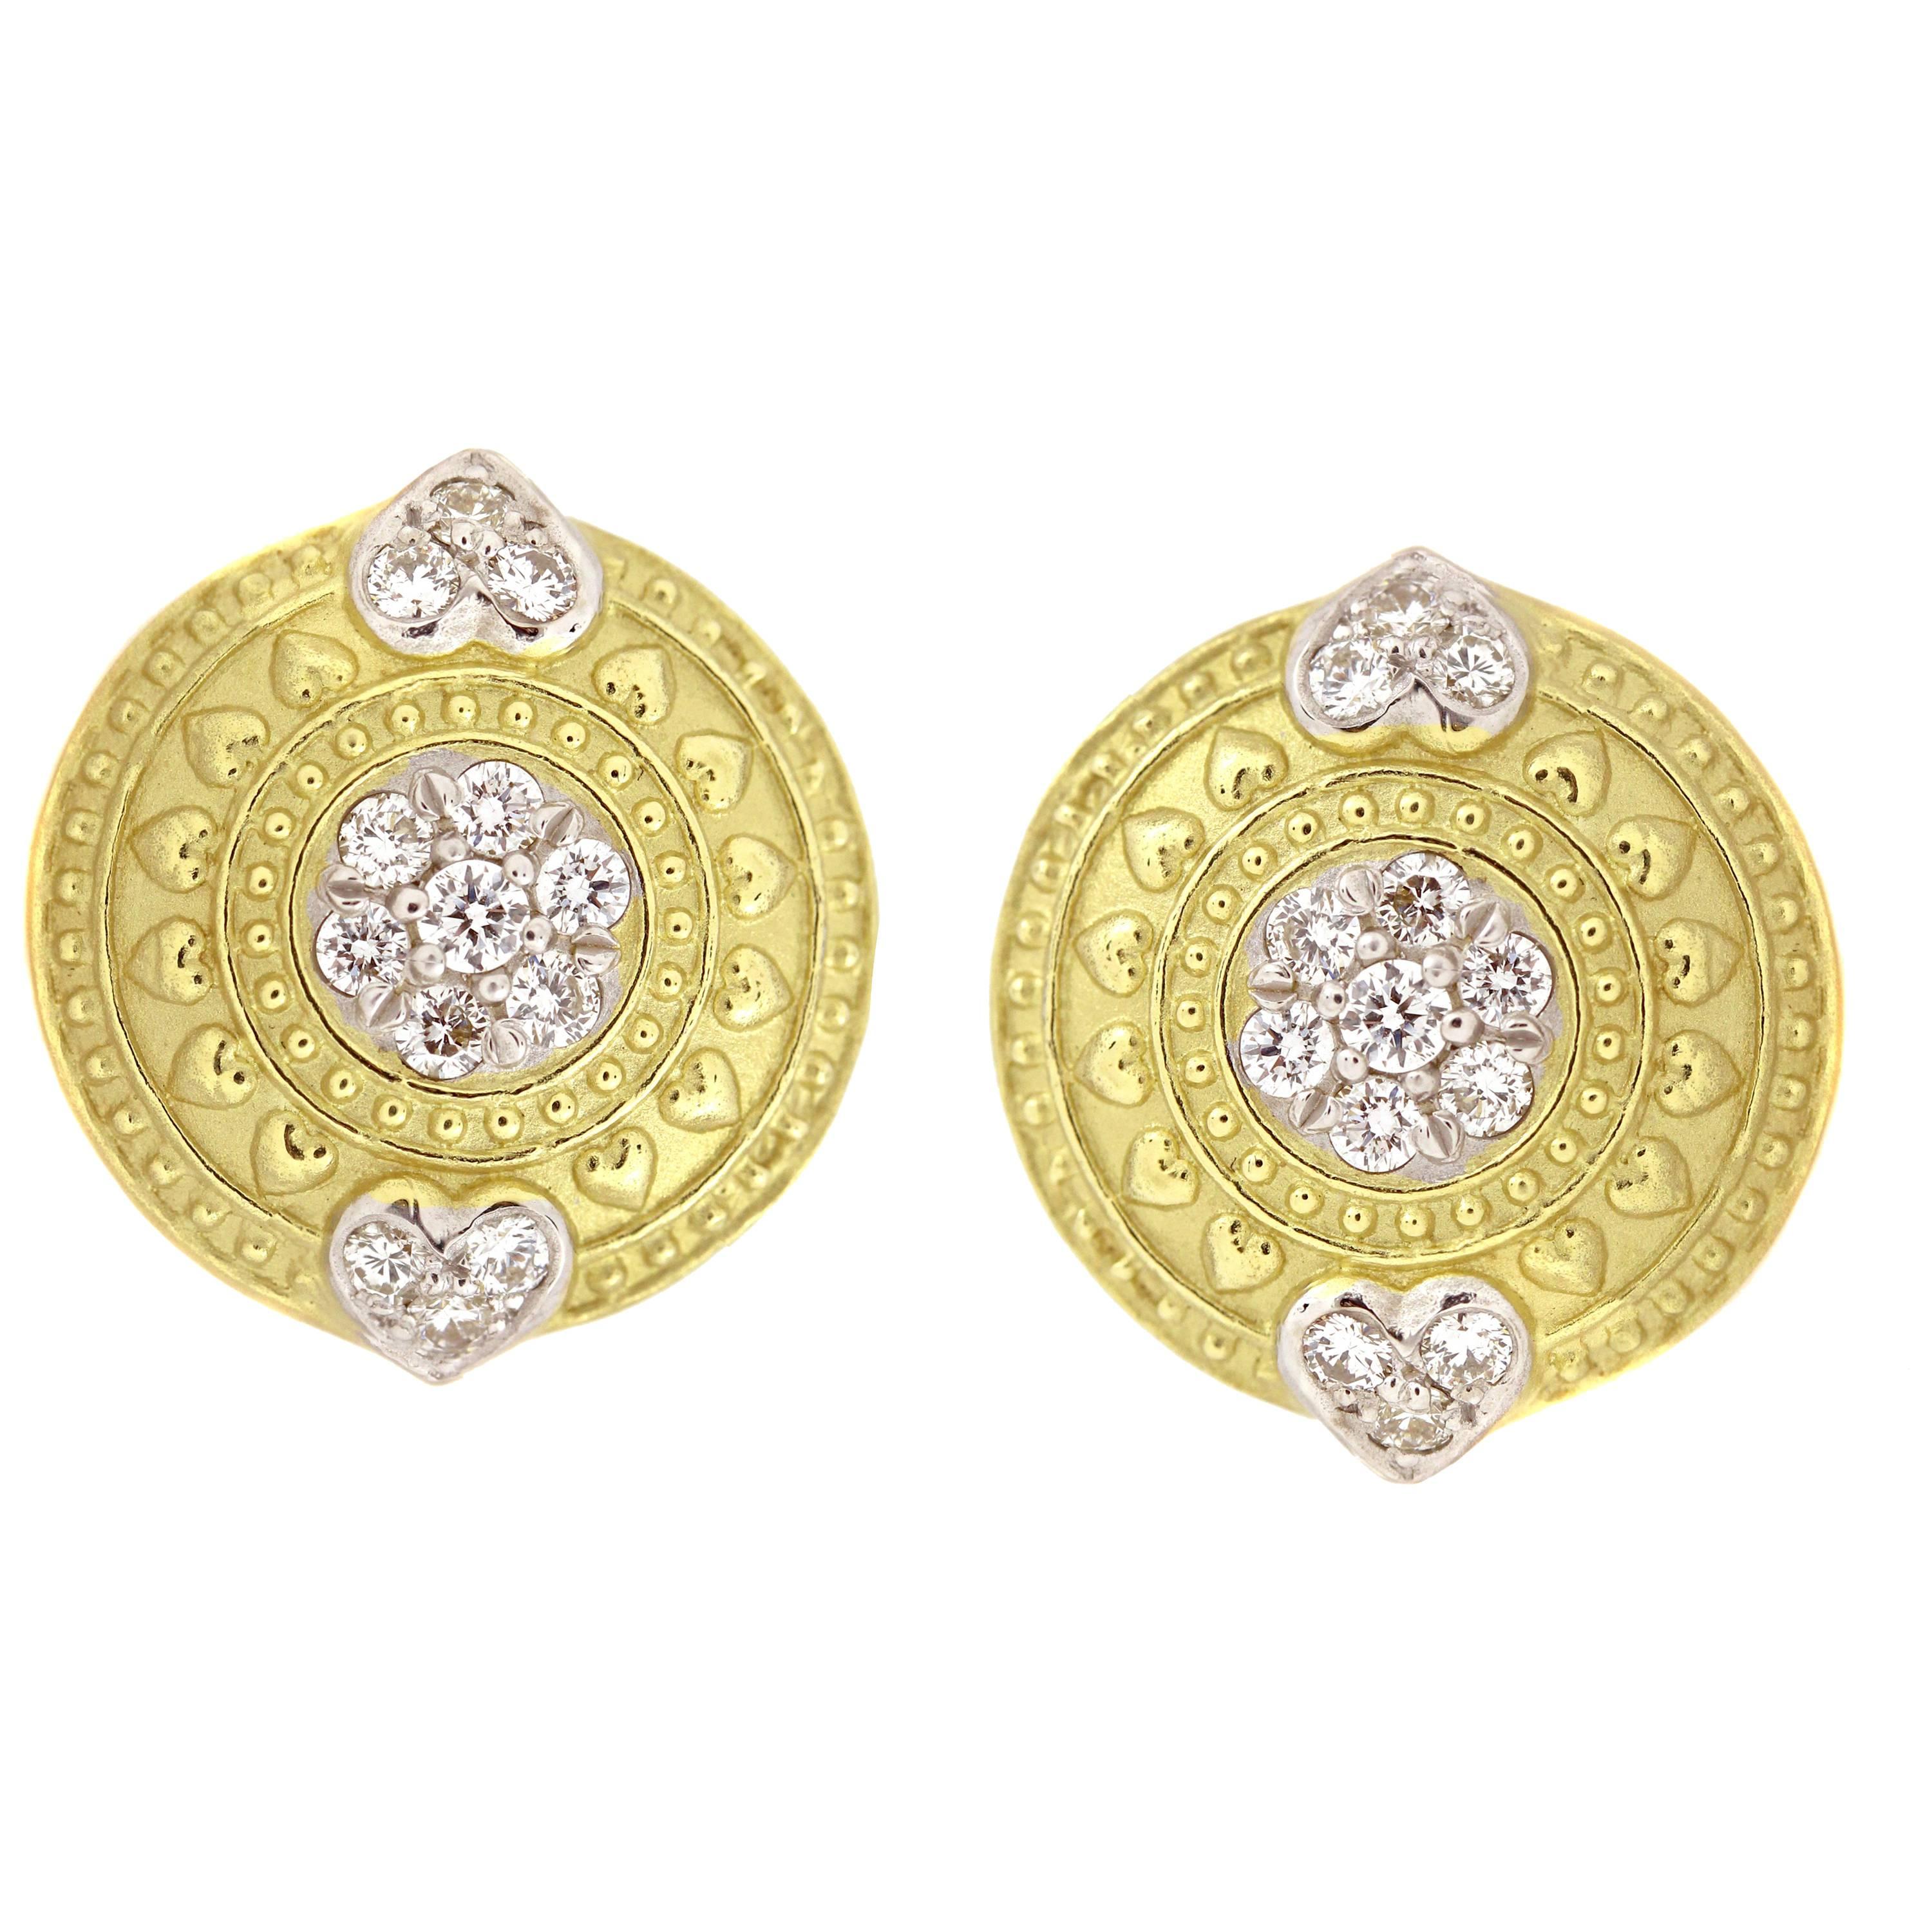 Stambolian Gold and Diamond Earrings